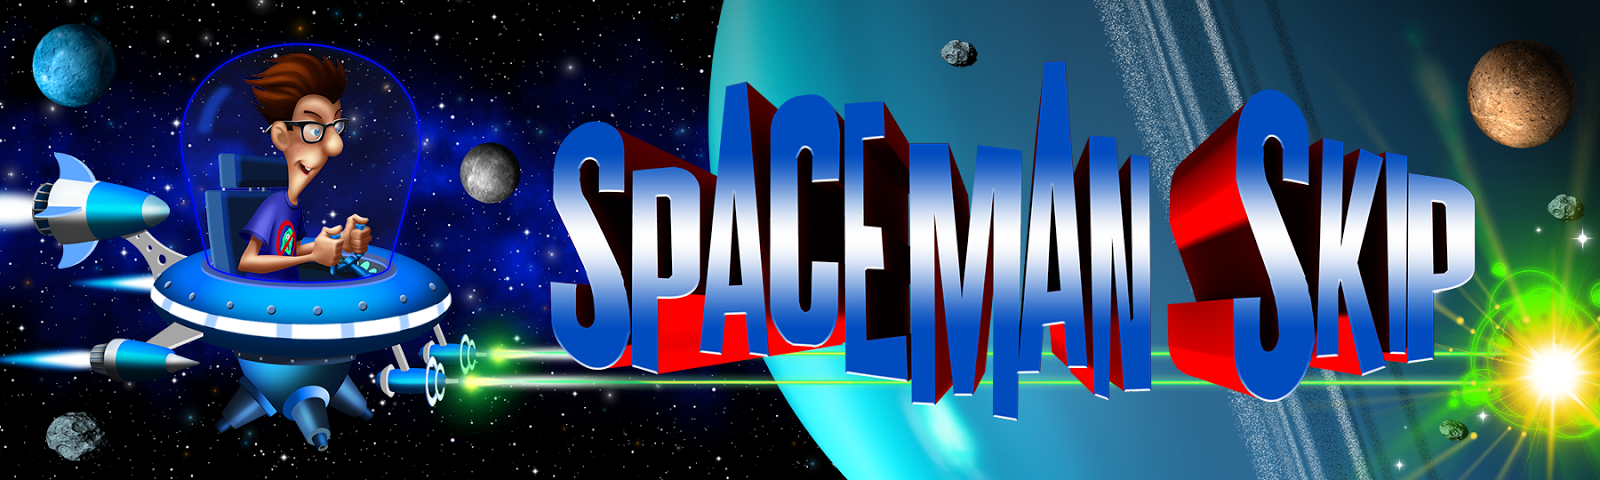 http://spacemanskipapp.blogspot.com/p/about-spaceman.html